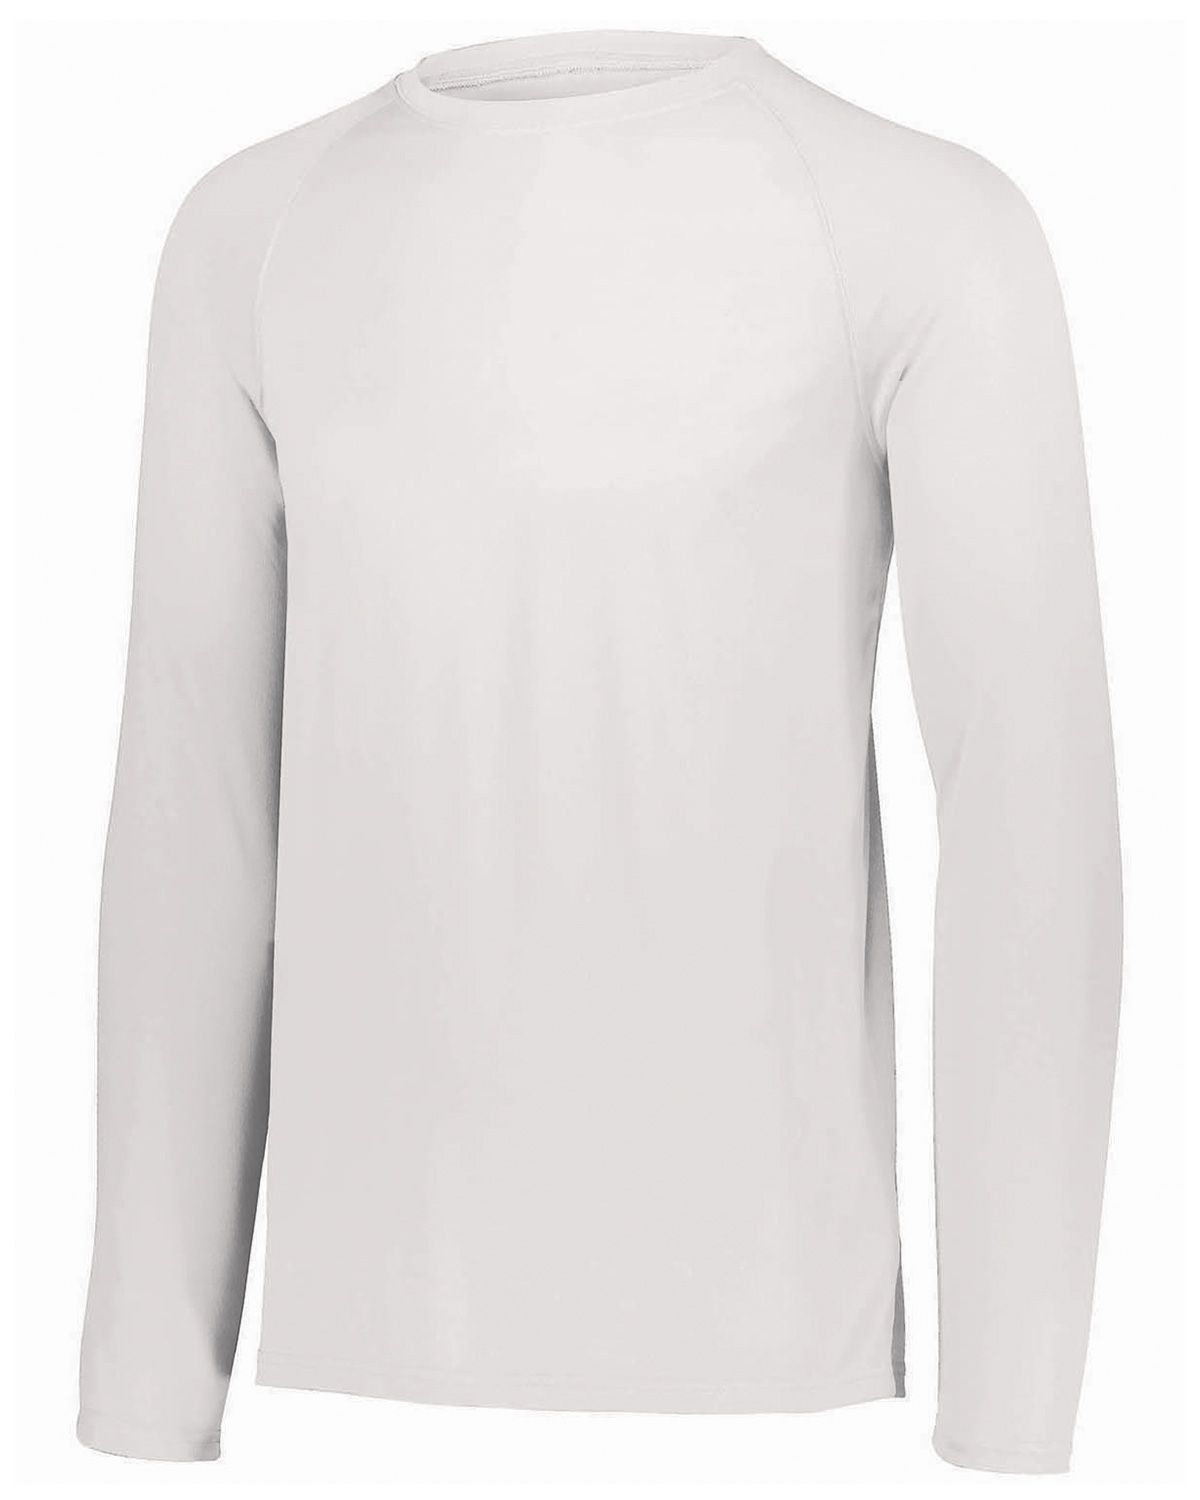 Augusta Sportswear 2795 Men's Attain Wicking Long-Sleeve T-Shirt